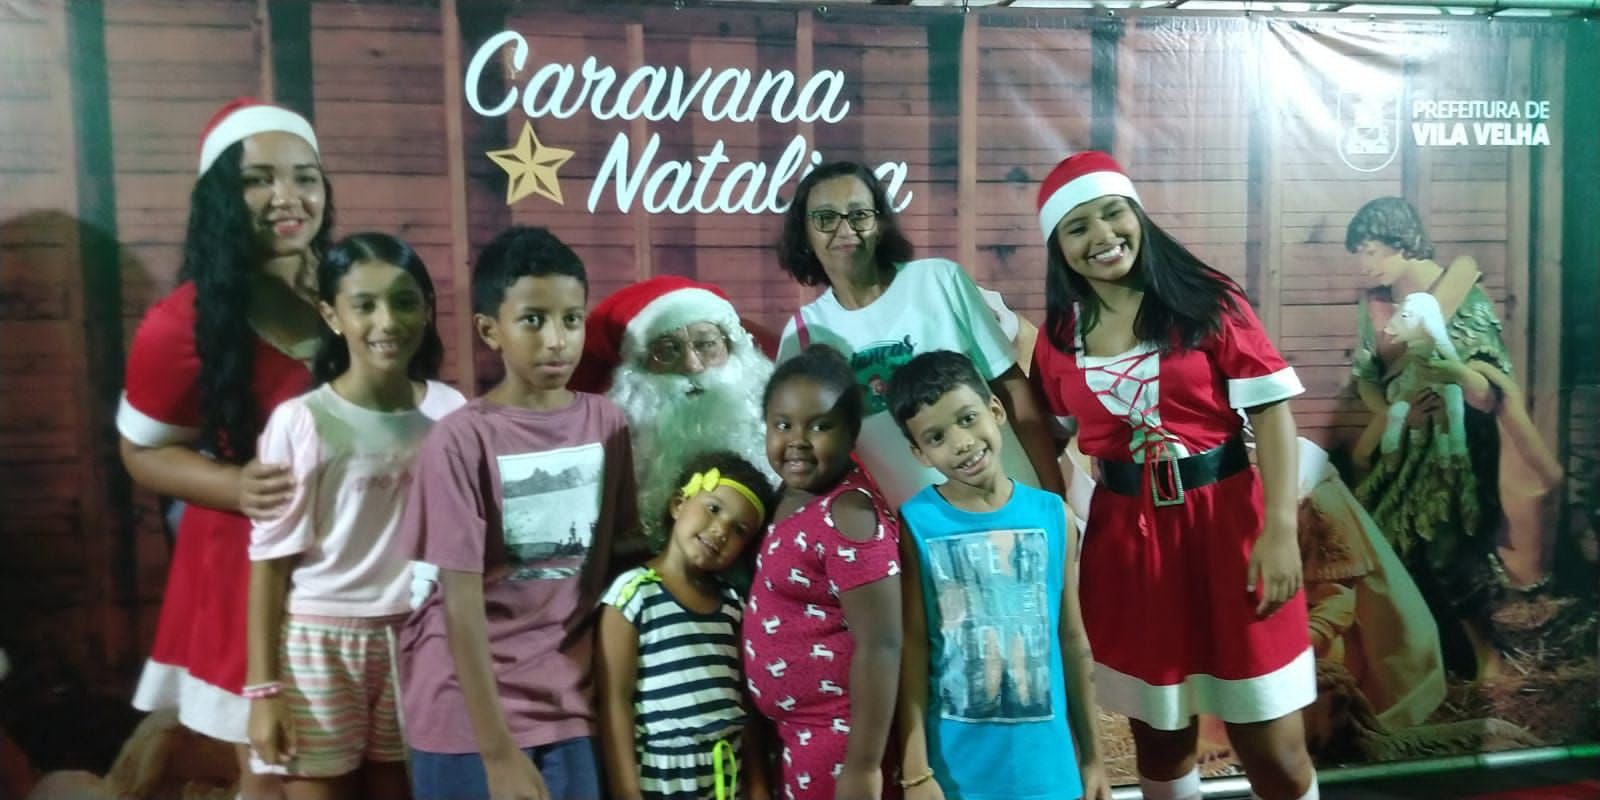 Caravana Natalina de Papai Noel visita 26 comunidades em Vila Velha